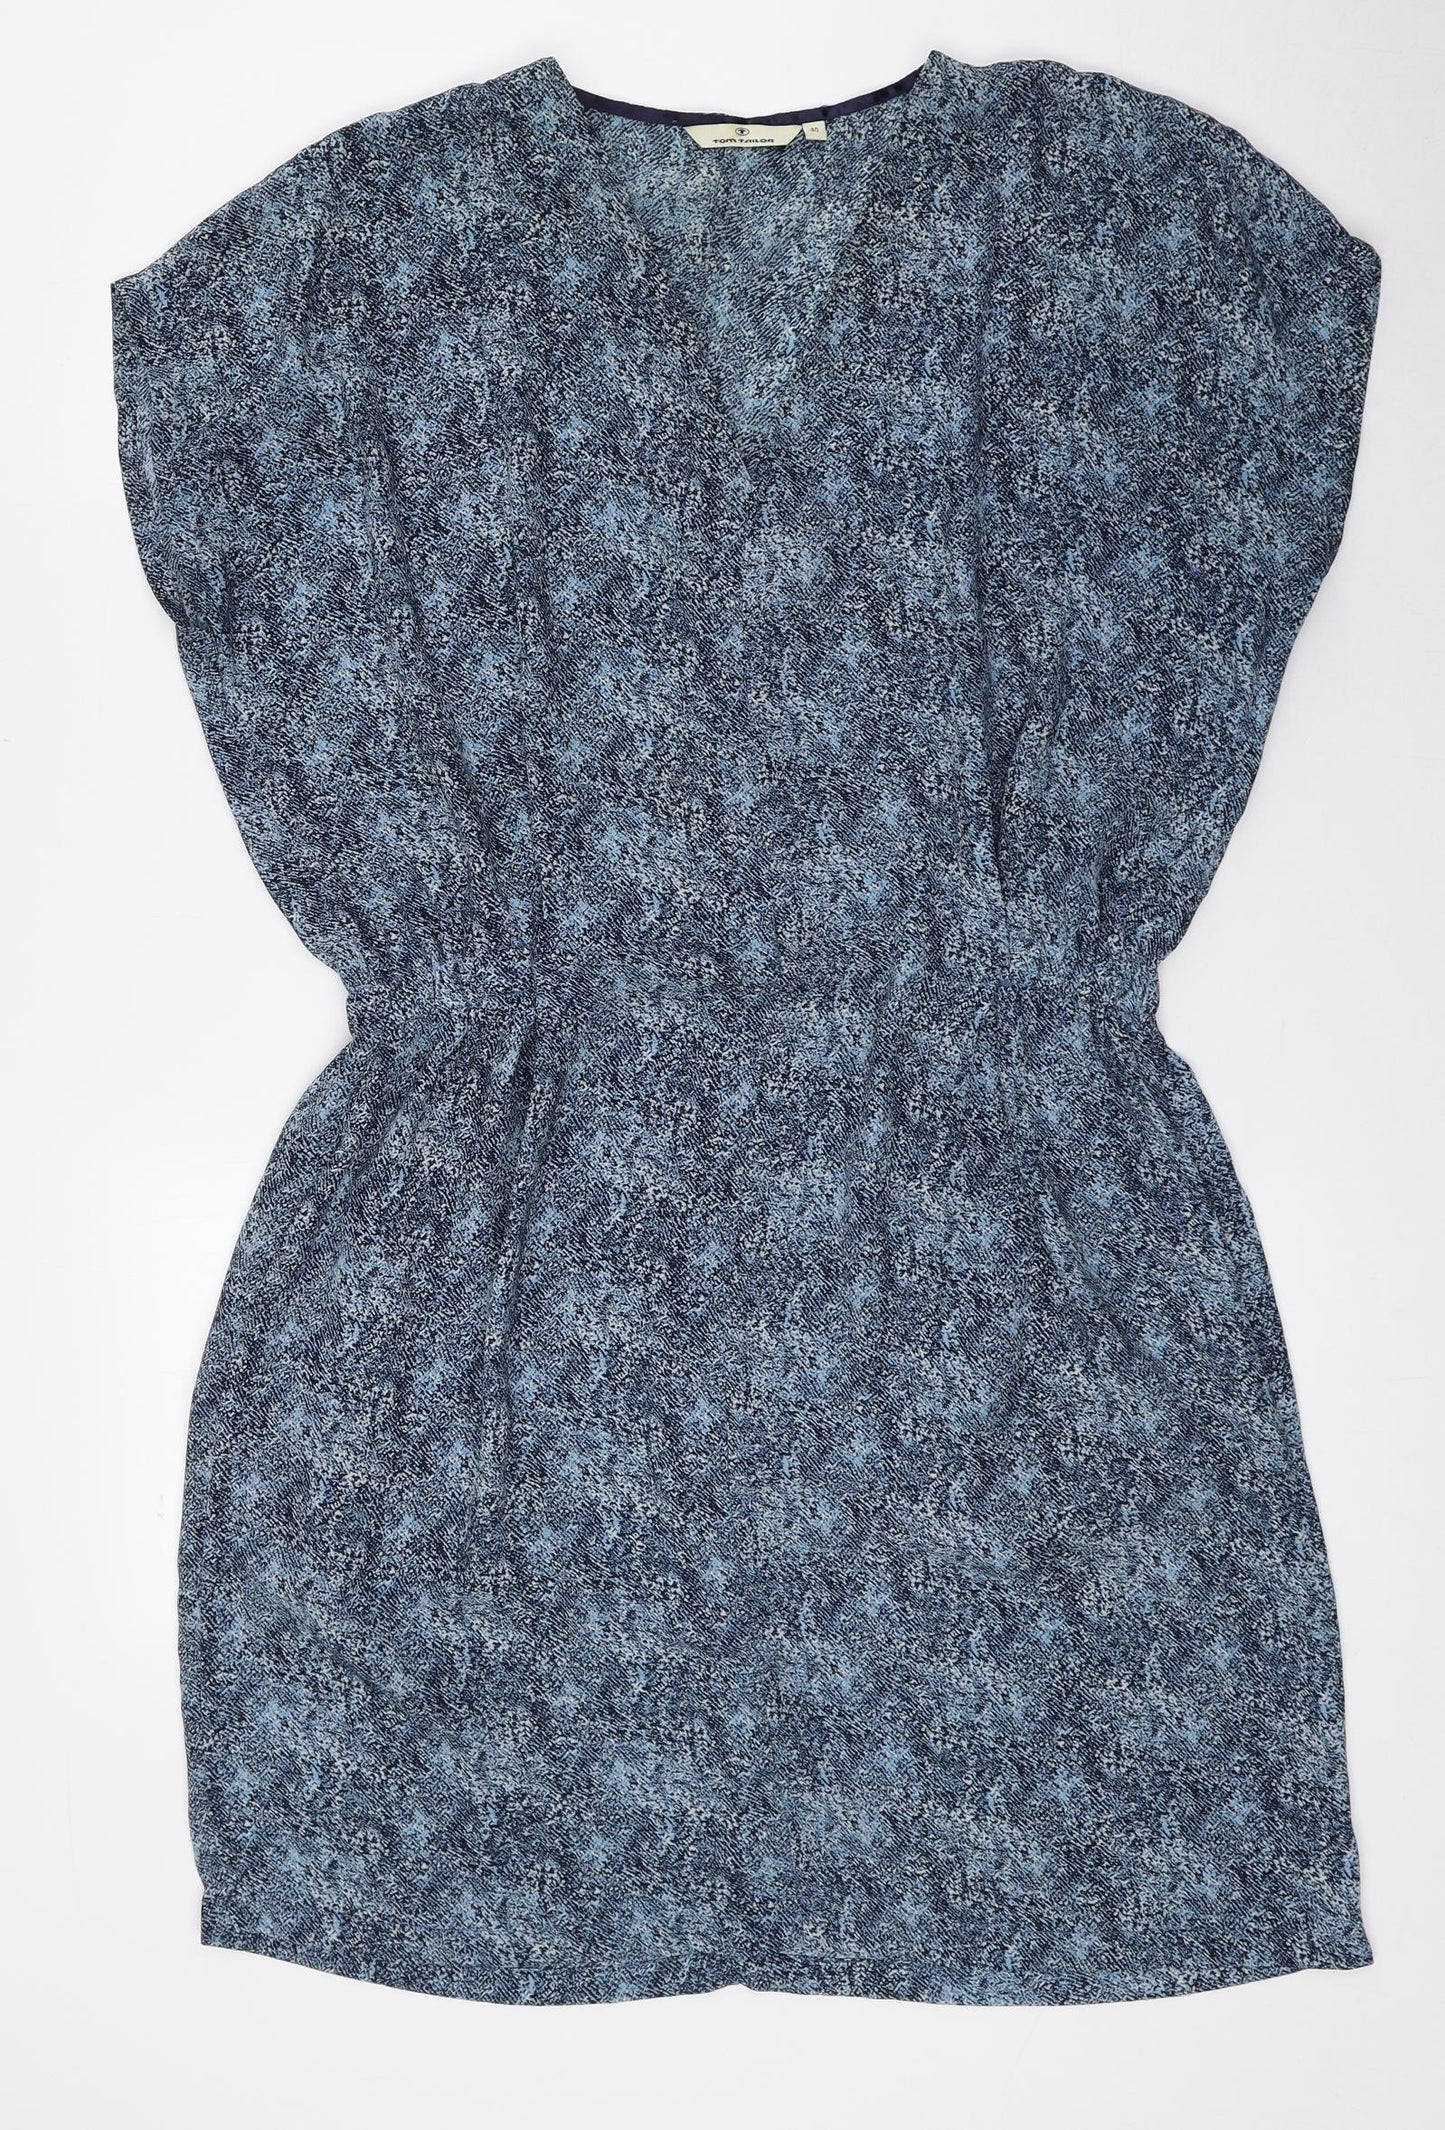 TOM TAILOR Womens Blue Geometric Polyester Shirt Dress Size 40 V-Neck